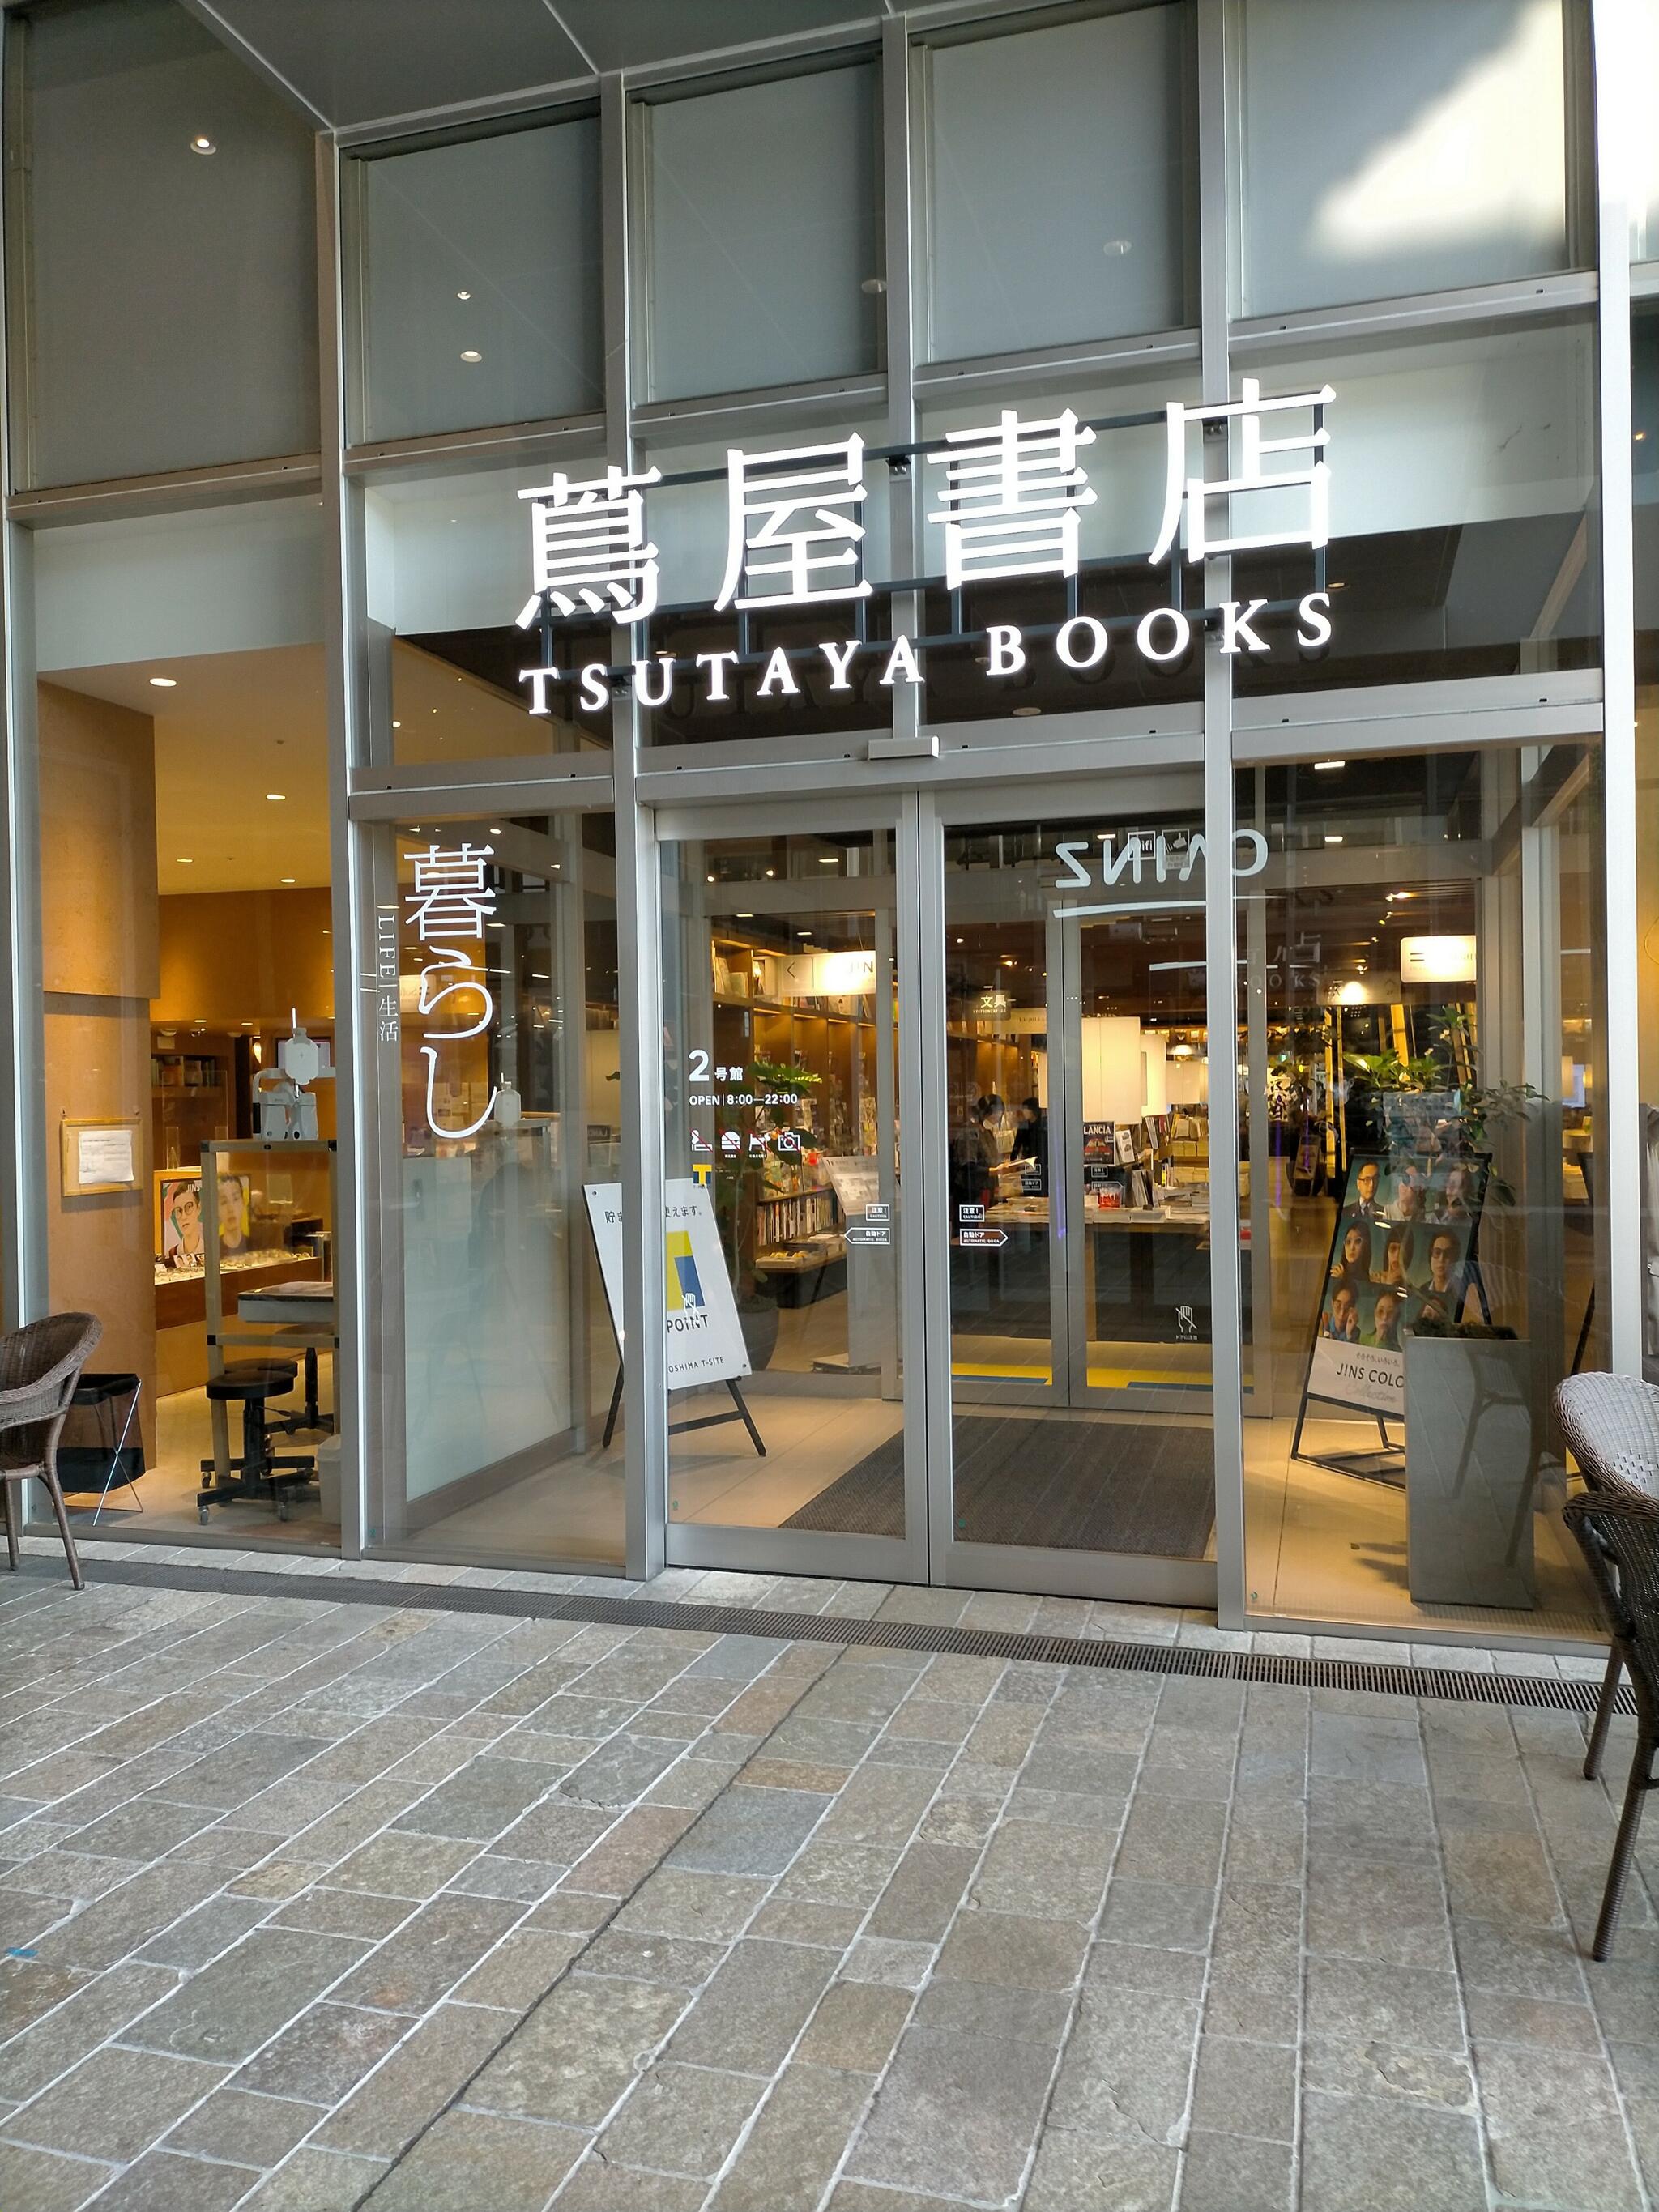 TSUTAYA BOOK 広島 蔦屋書店の代表写真6